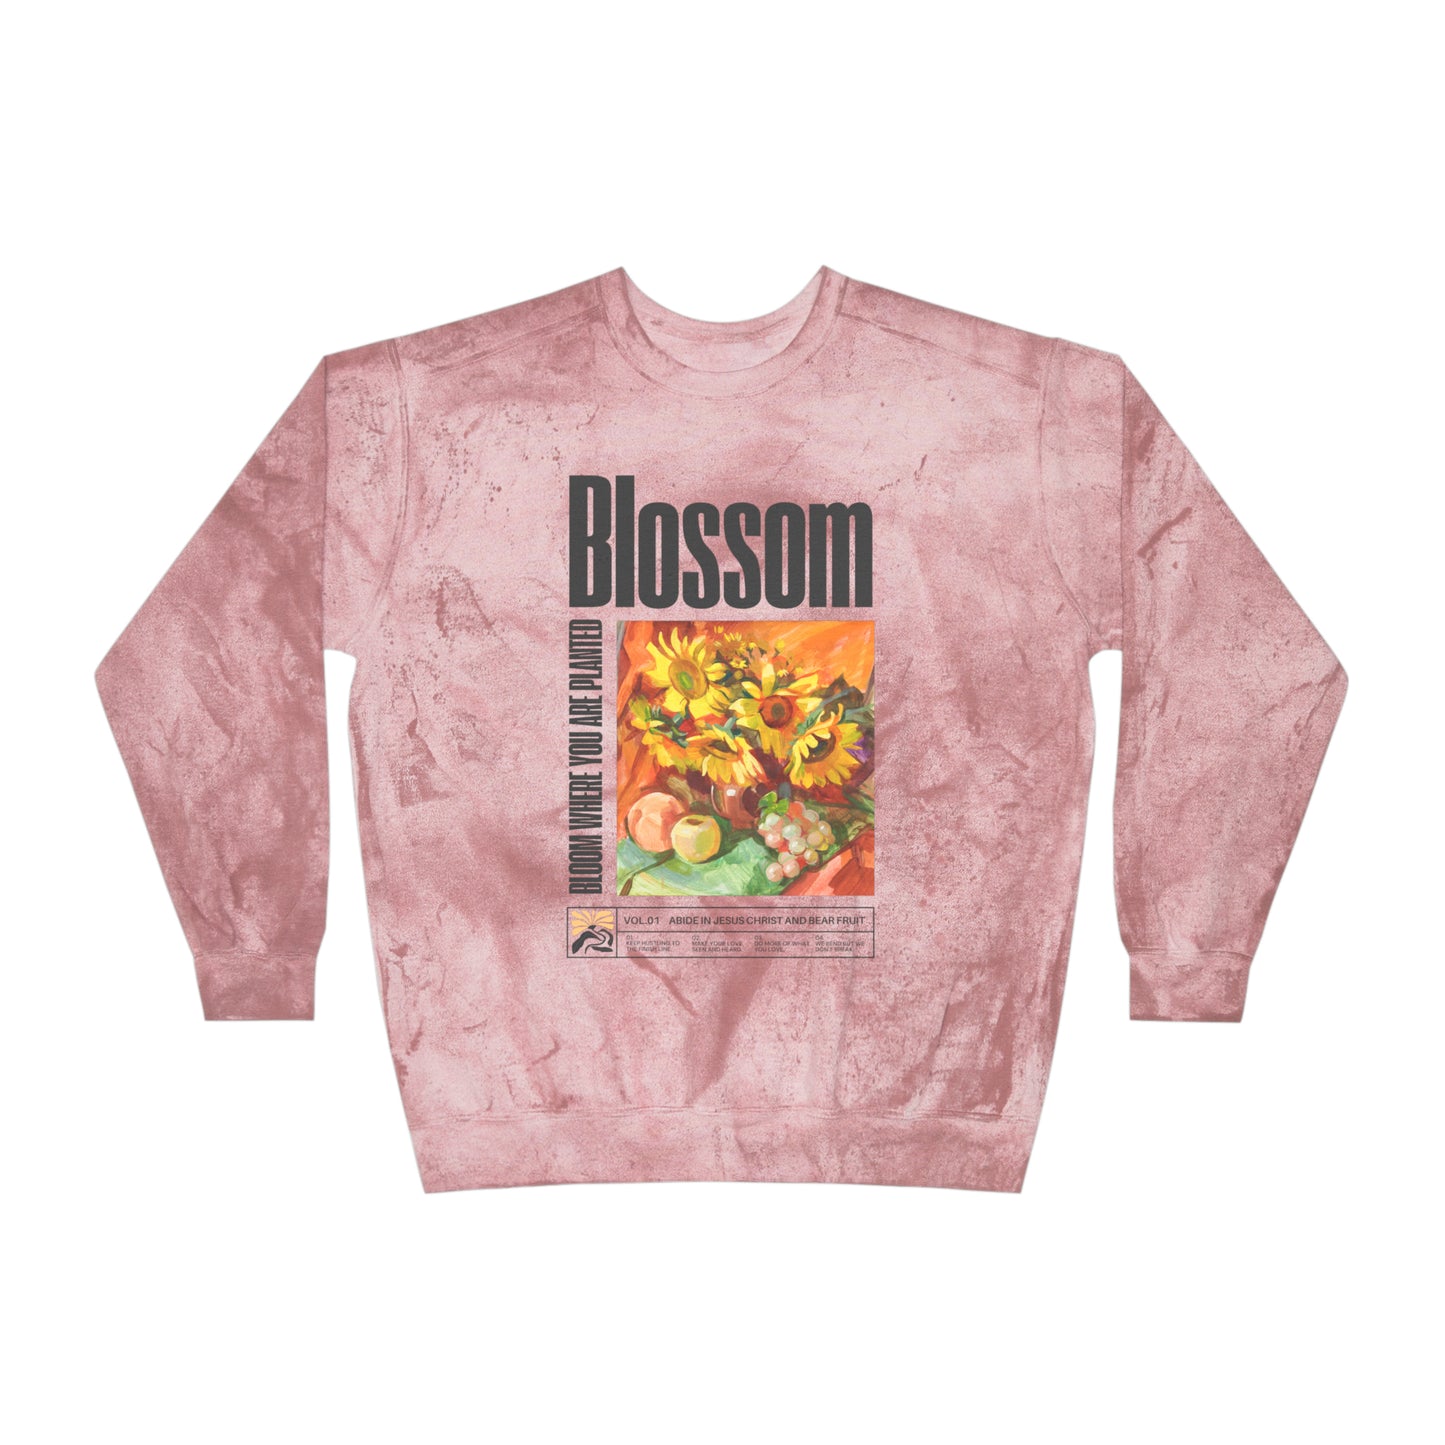 Blossom Color Blast Sweatshirt: Bloom Where Planted